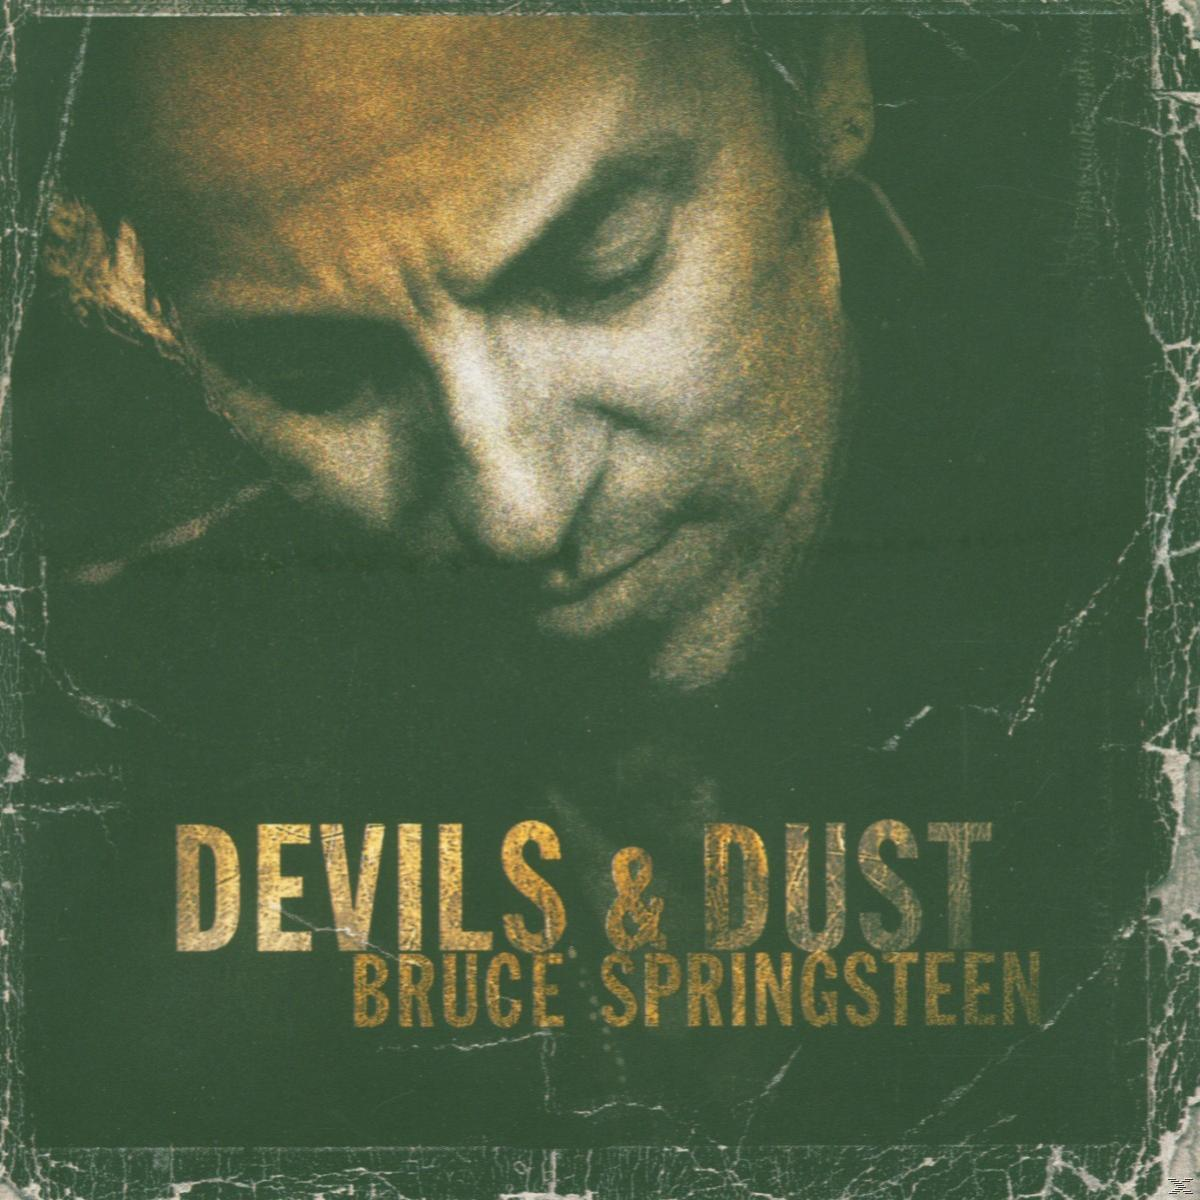 Springsteen - Devils & Dust - DVD-Video-Single) + (CD Bruce